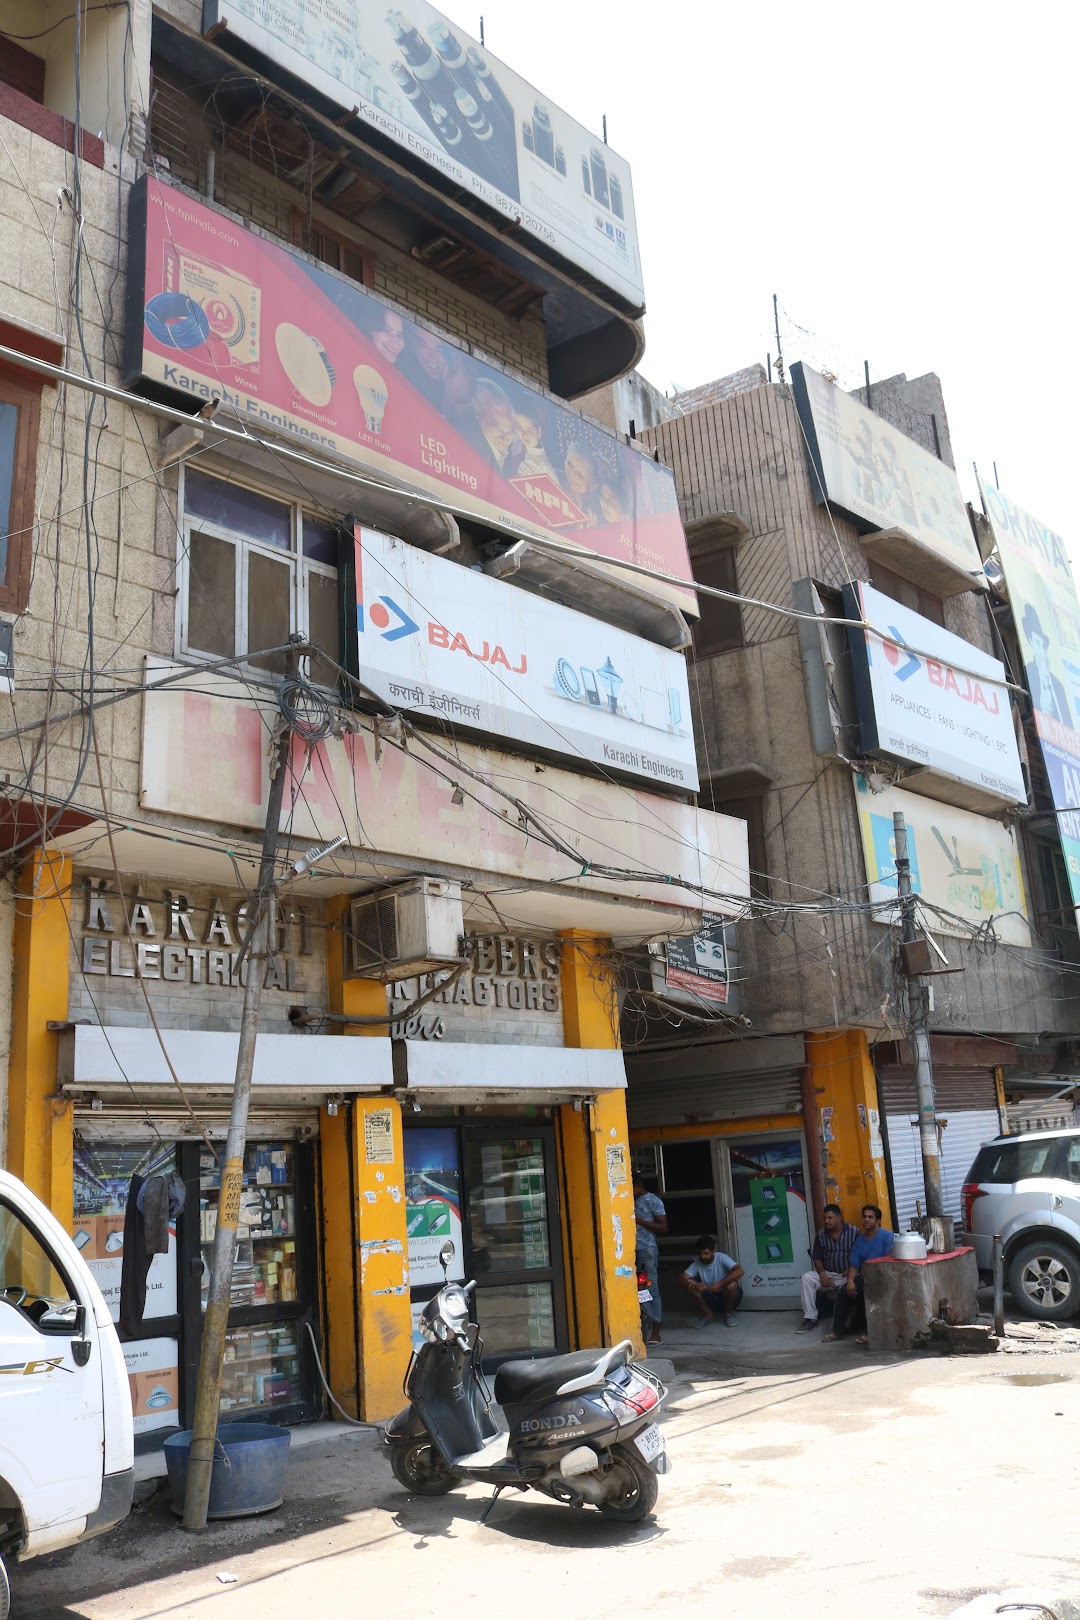 Karachi Engineers - Best Electrical Goods Dealers in Amritsar